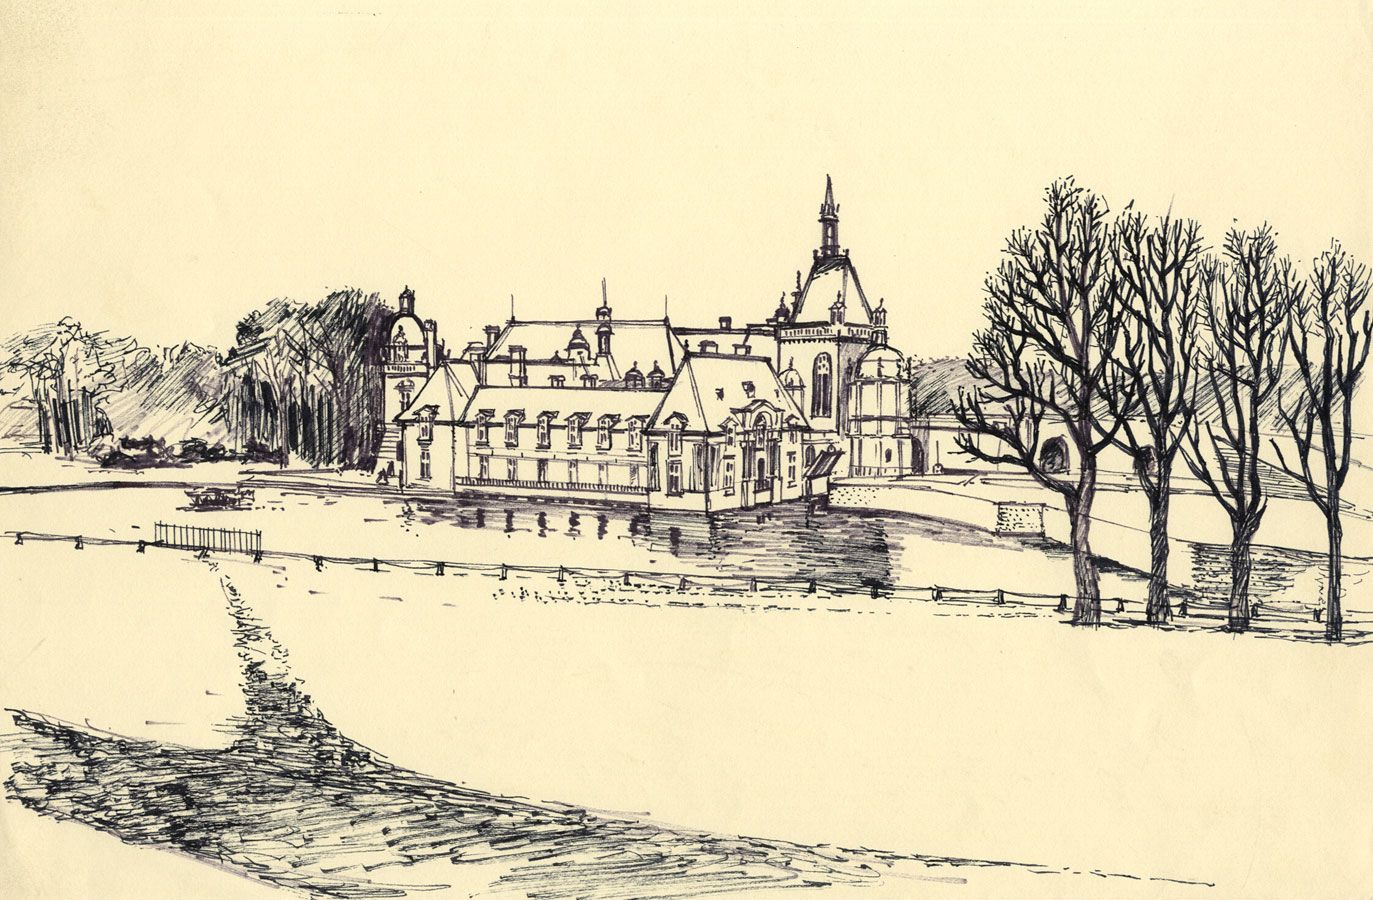 James Arnold Martin ChÃ¢teau de VitrÃ© France-Mid-20th-century pen & ink drawing